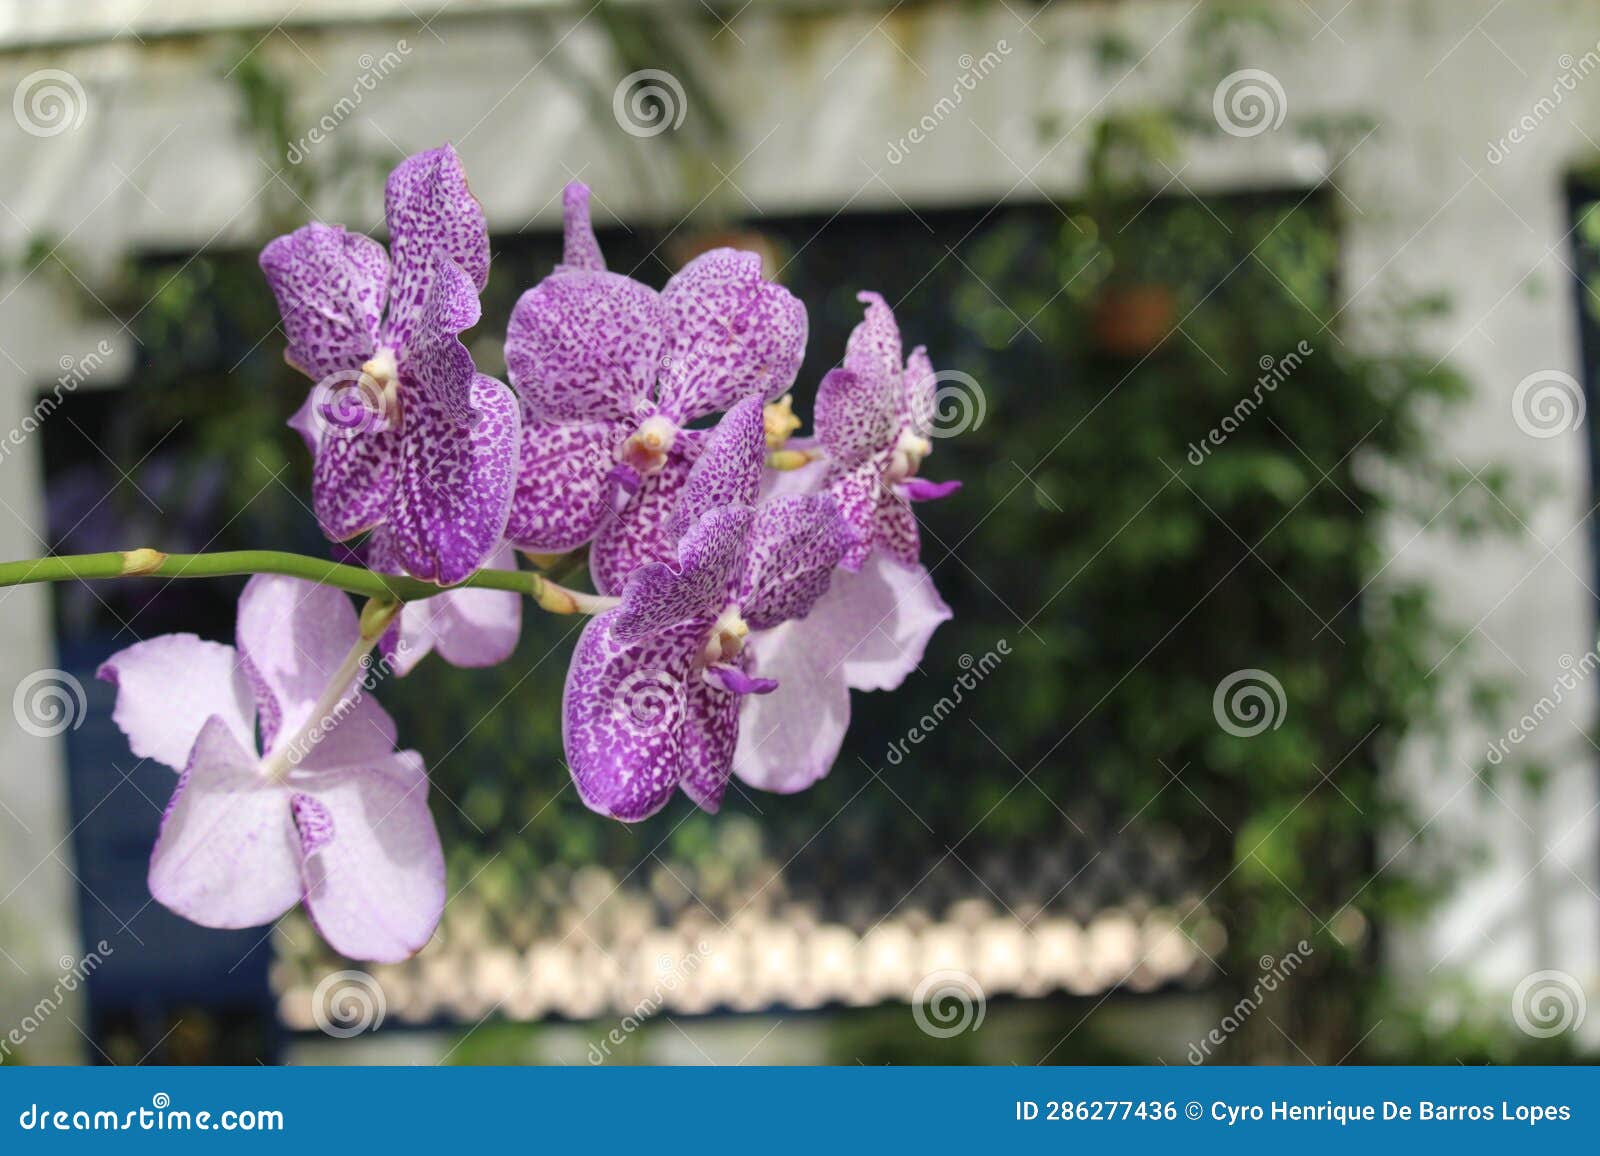 vanda coerulescens background photo, asian species, sky-blue vanda orchid, introduced ornamental species